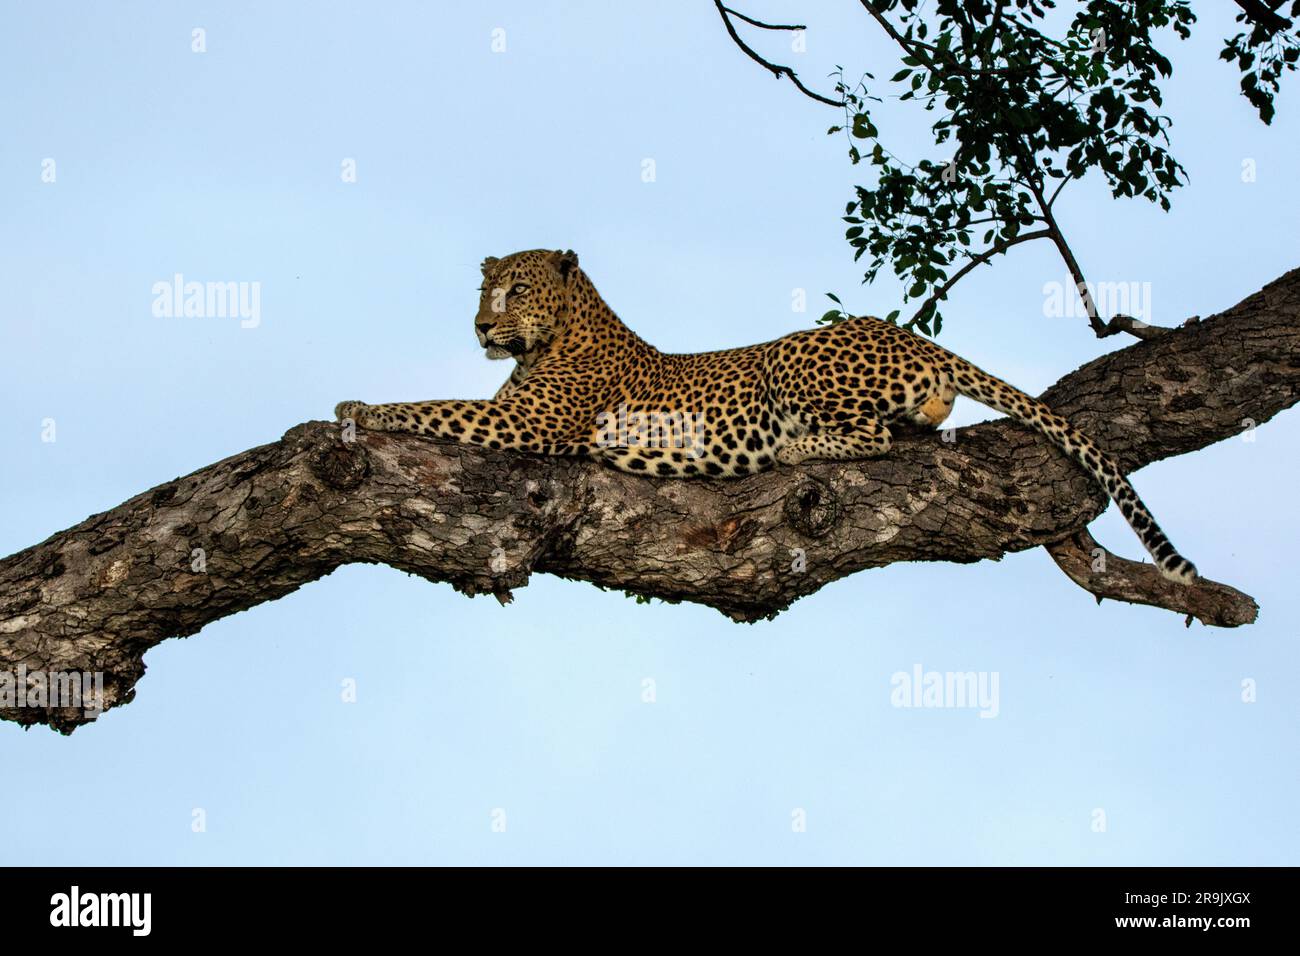 A male leopard, Panthera pardus, lying in a Marula tree, Sclerocarya birrea. Stock Photo